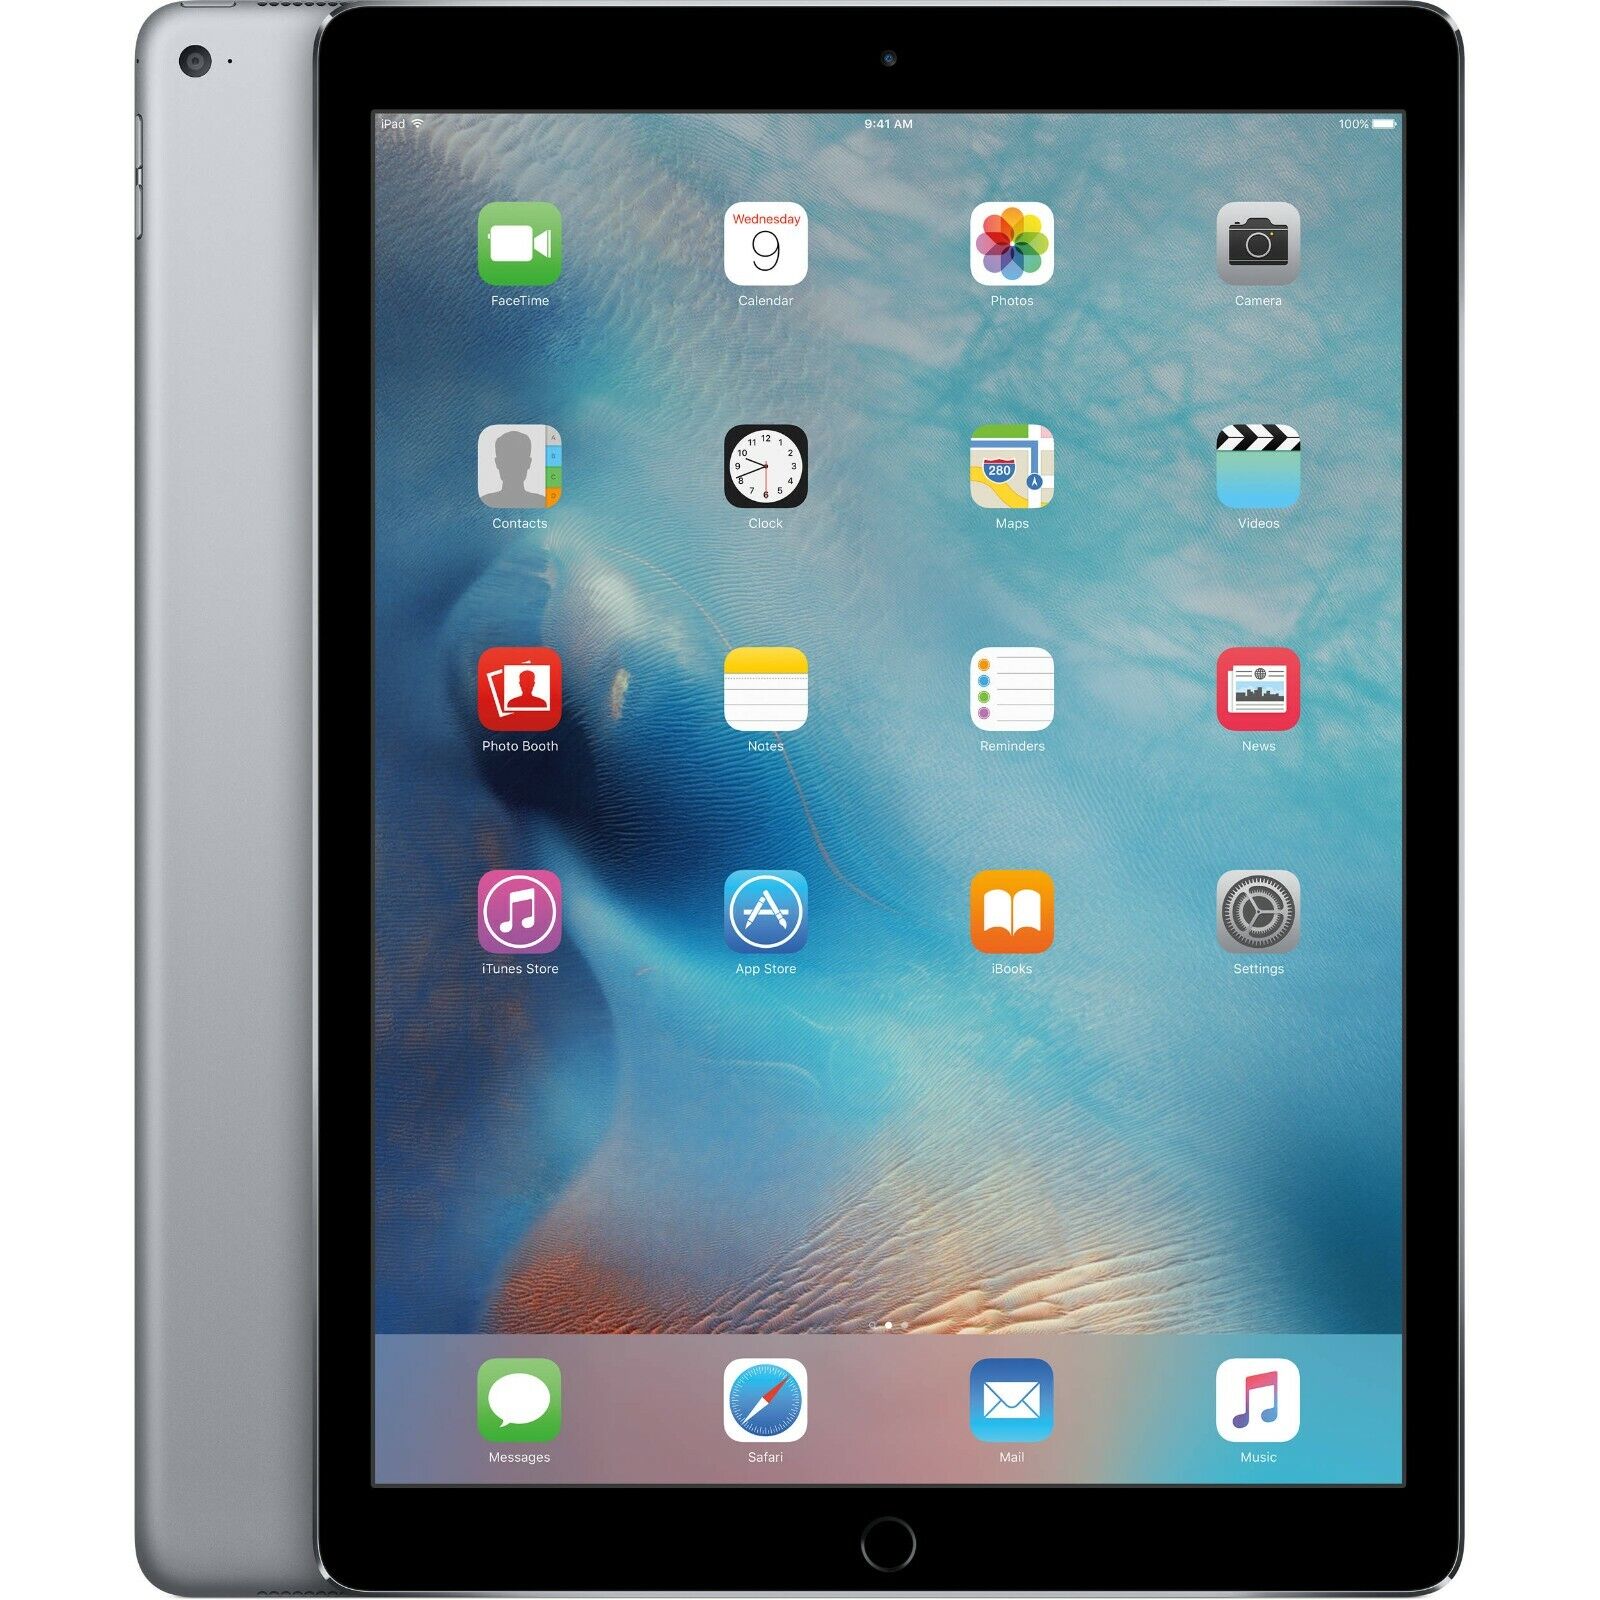 Apple iPad 5th gen Wifi or Cellular Unlocked - Gray Silver Gold - 32GB 128GB